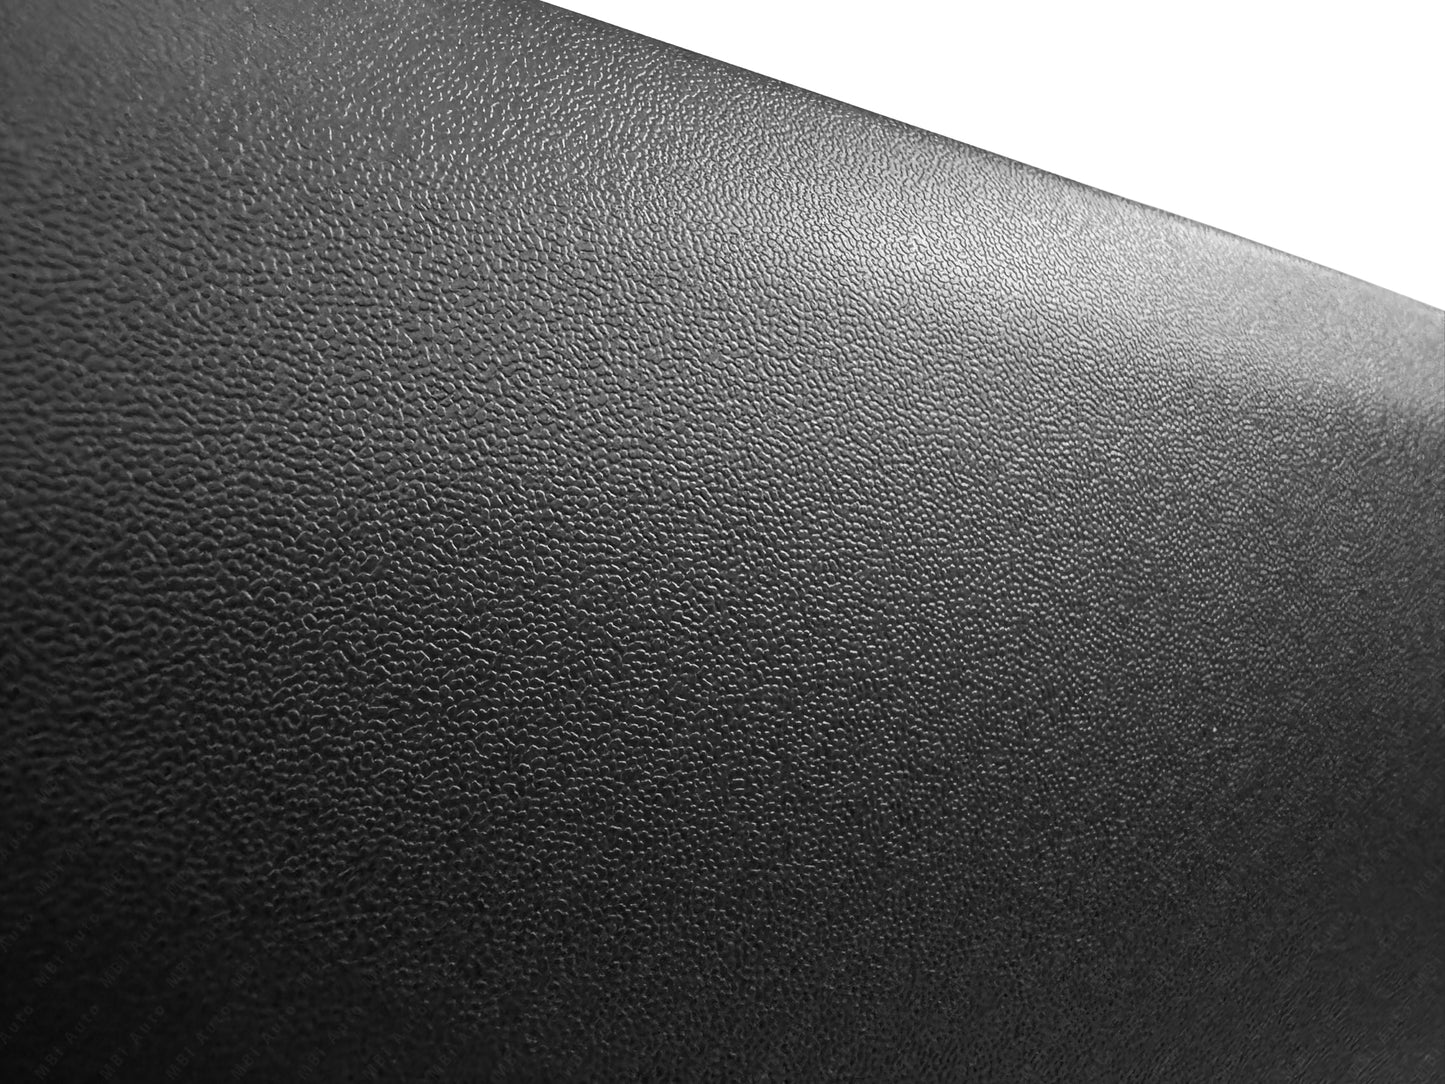 Kia Sorento 2011 - 2013 Rear Textured Bumper Cover 11 - 13 KI1100155 Bumper-King